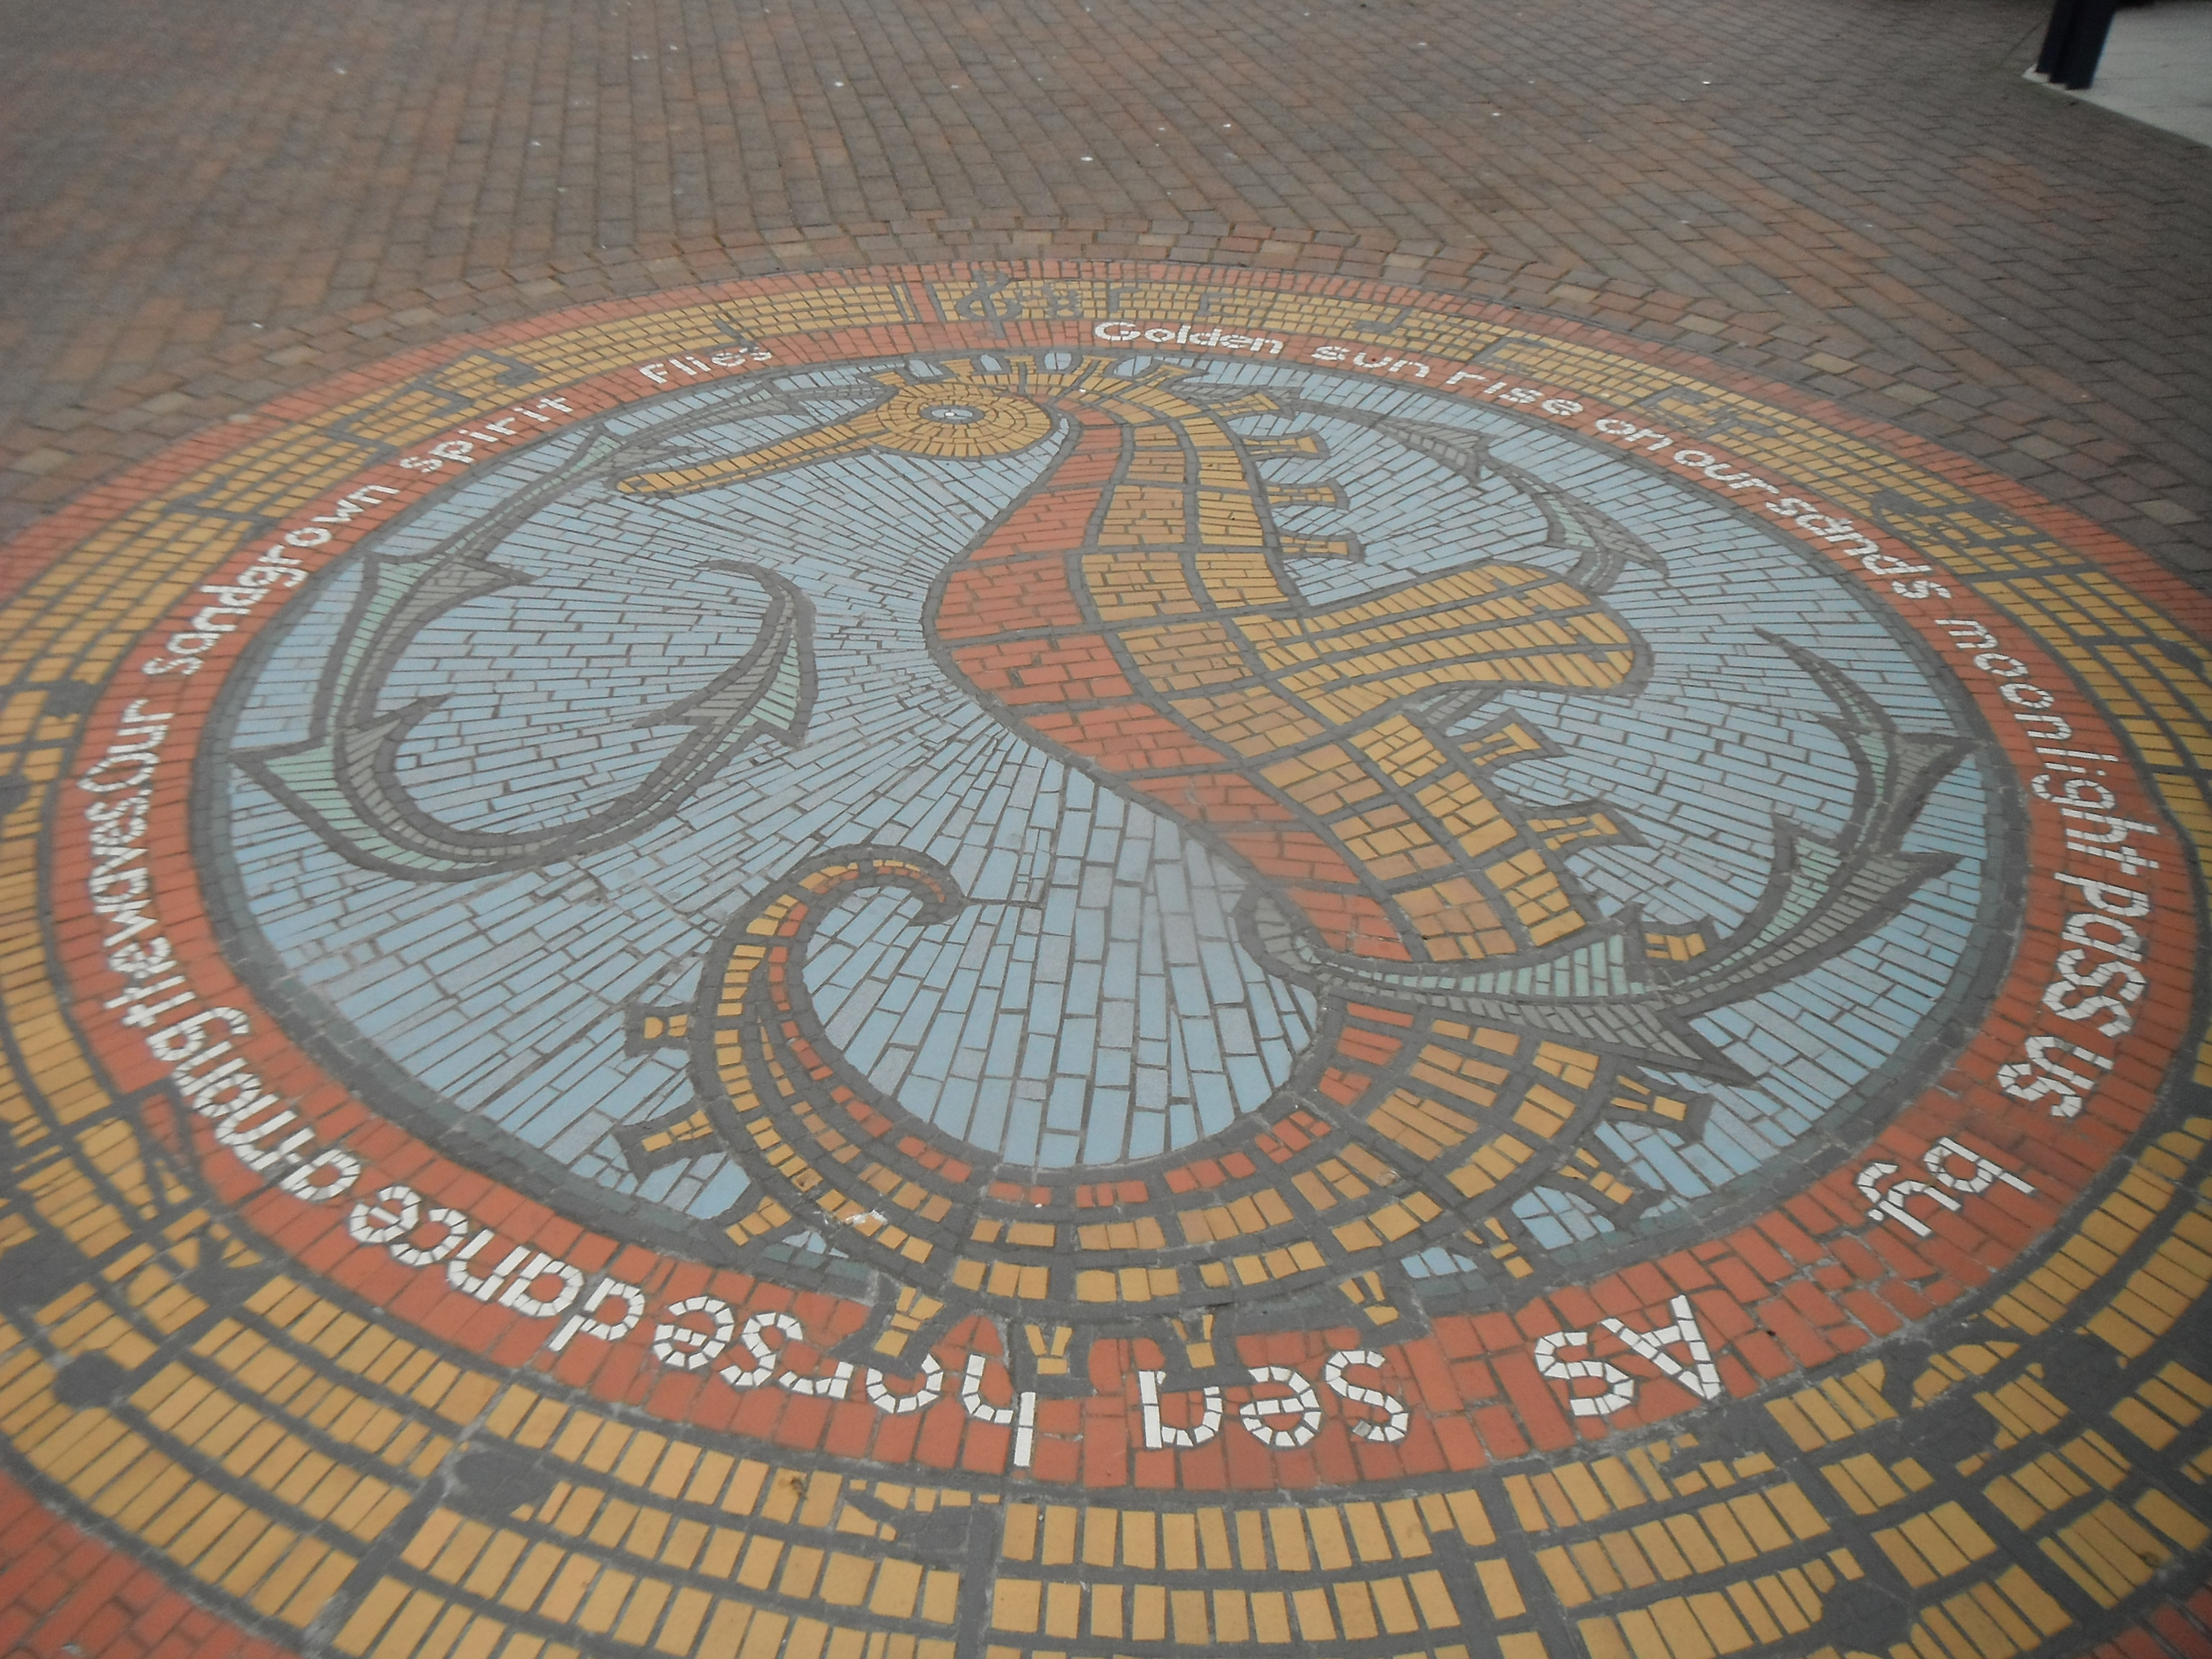 Photo taken by me – seahorse mosaic, St Anne’s, Lancashire  